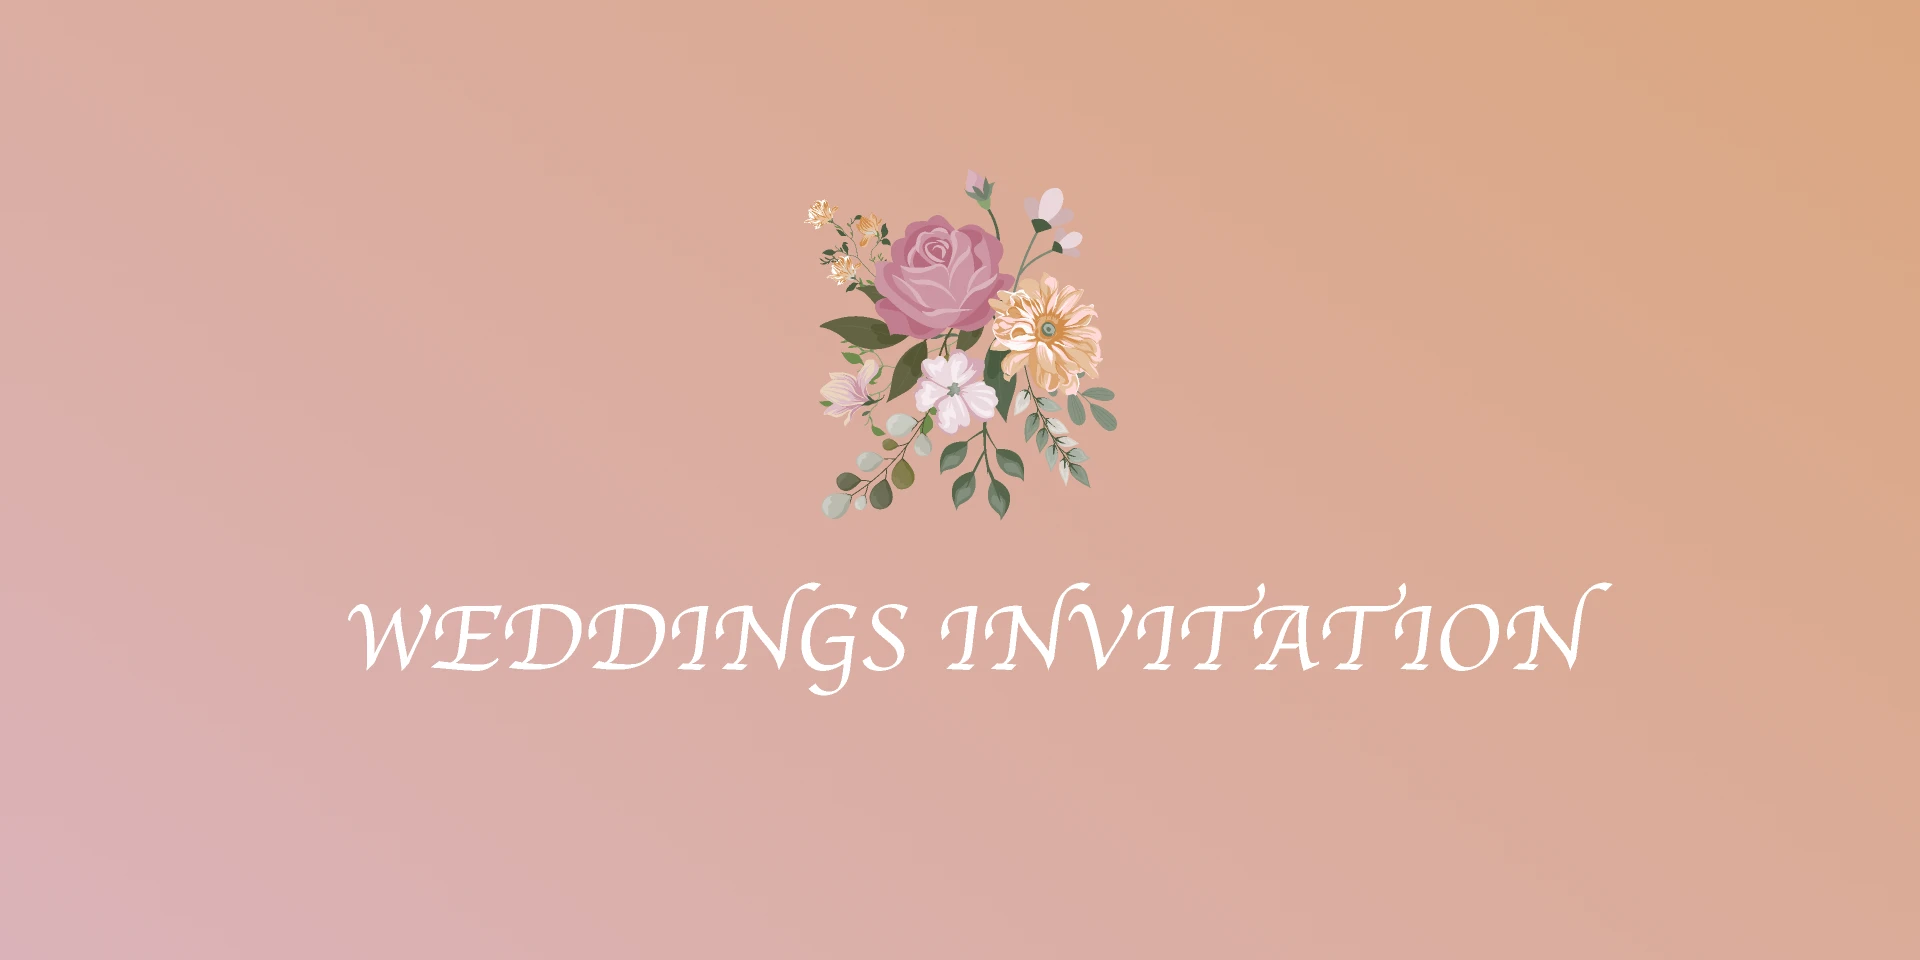 LANDING PAGE WEDDINGS INVITATION - NGUNDANG for Figma and Adobe XD